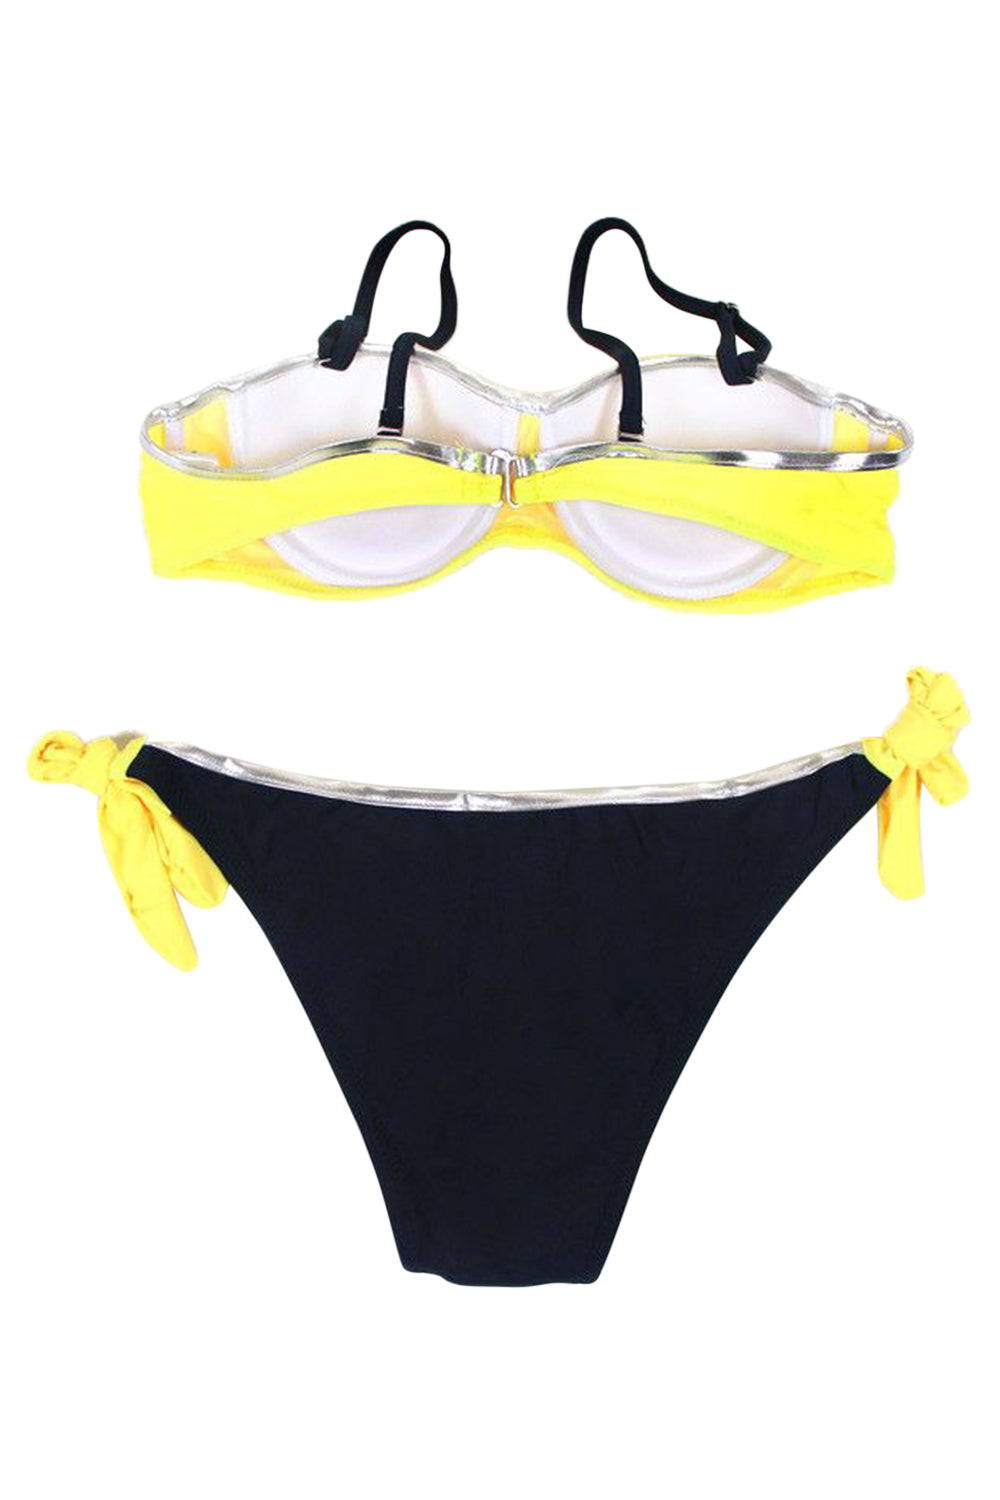 Iyasson Womens Low Rise Two Pieces Padded Bikini Set